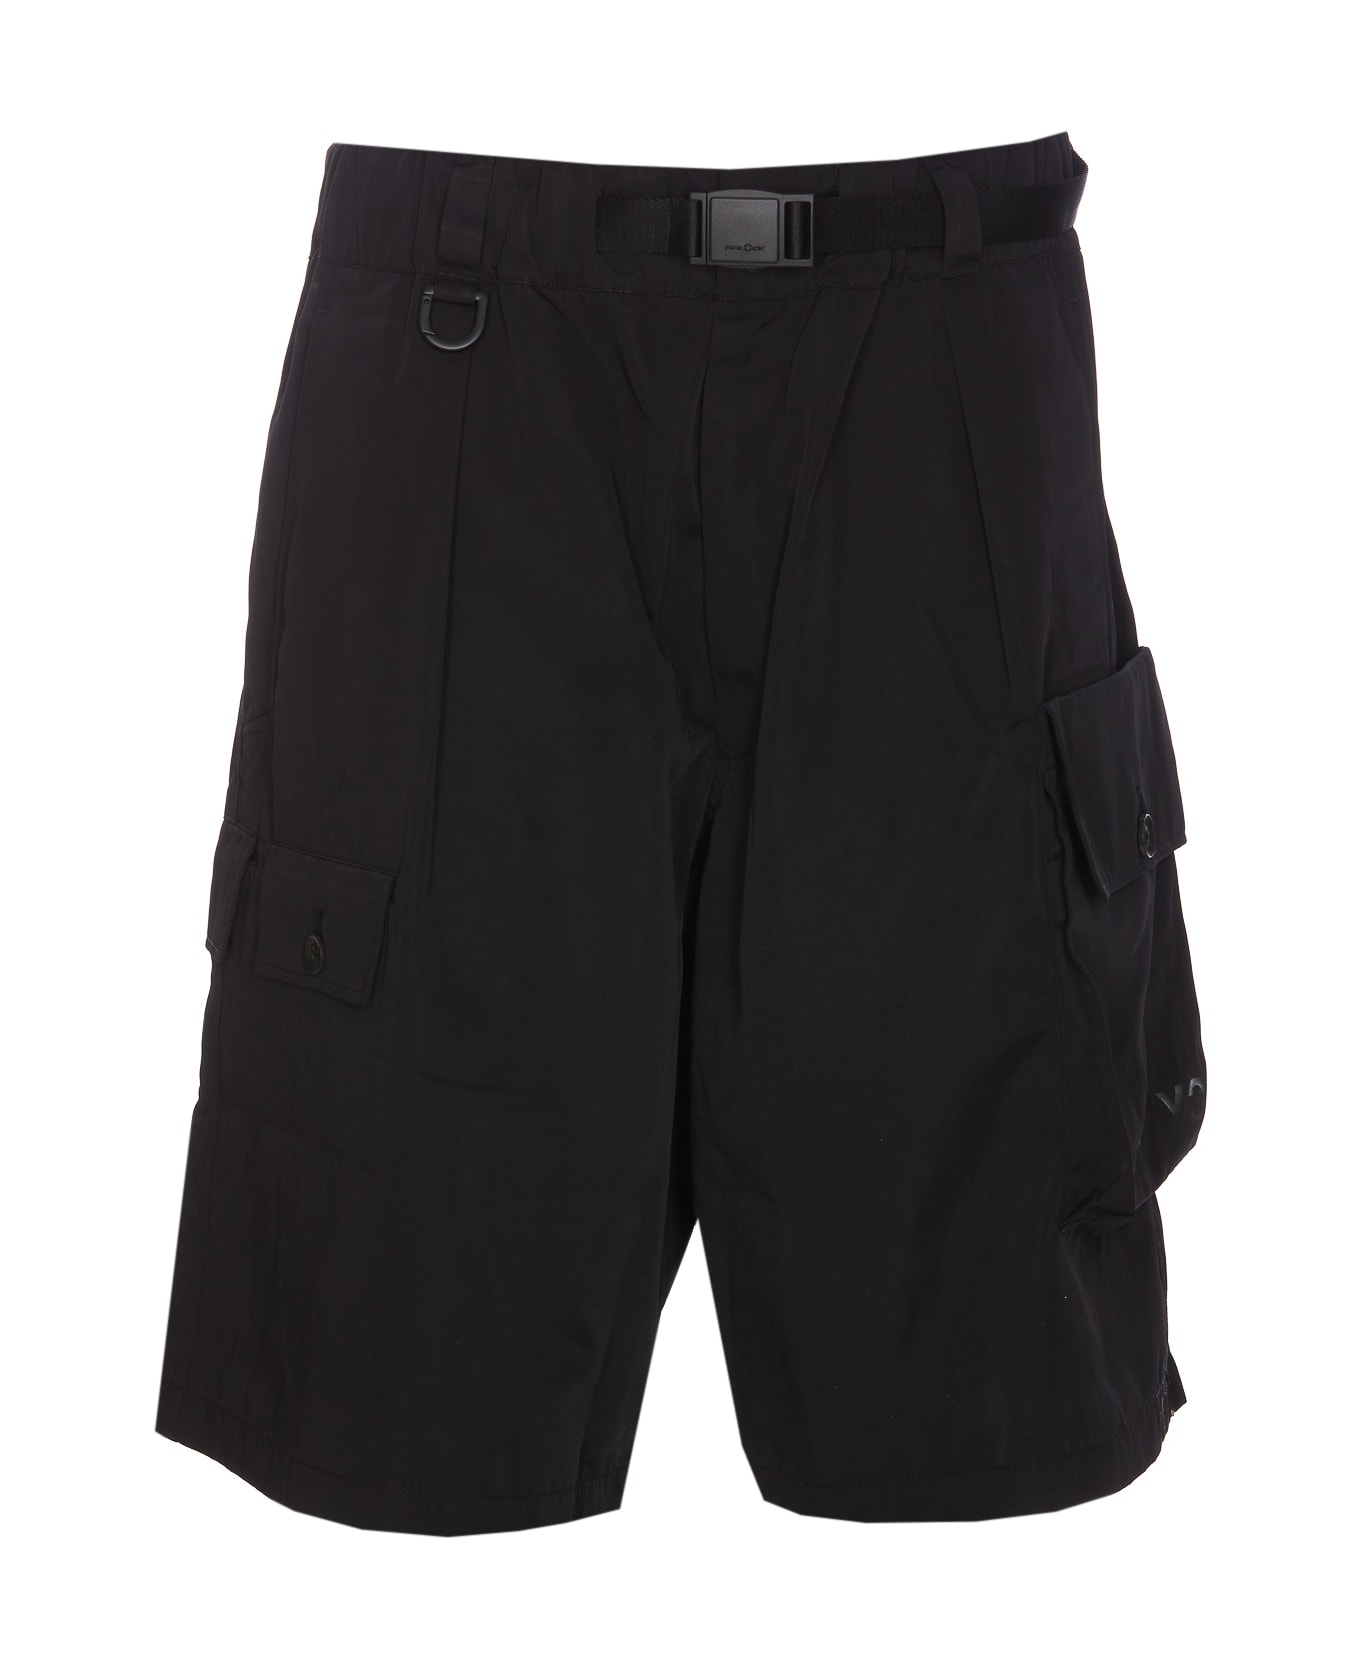 Y-3 Shorts - Black name:468